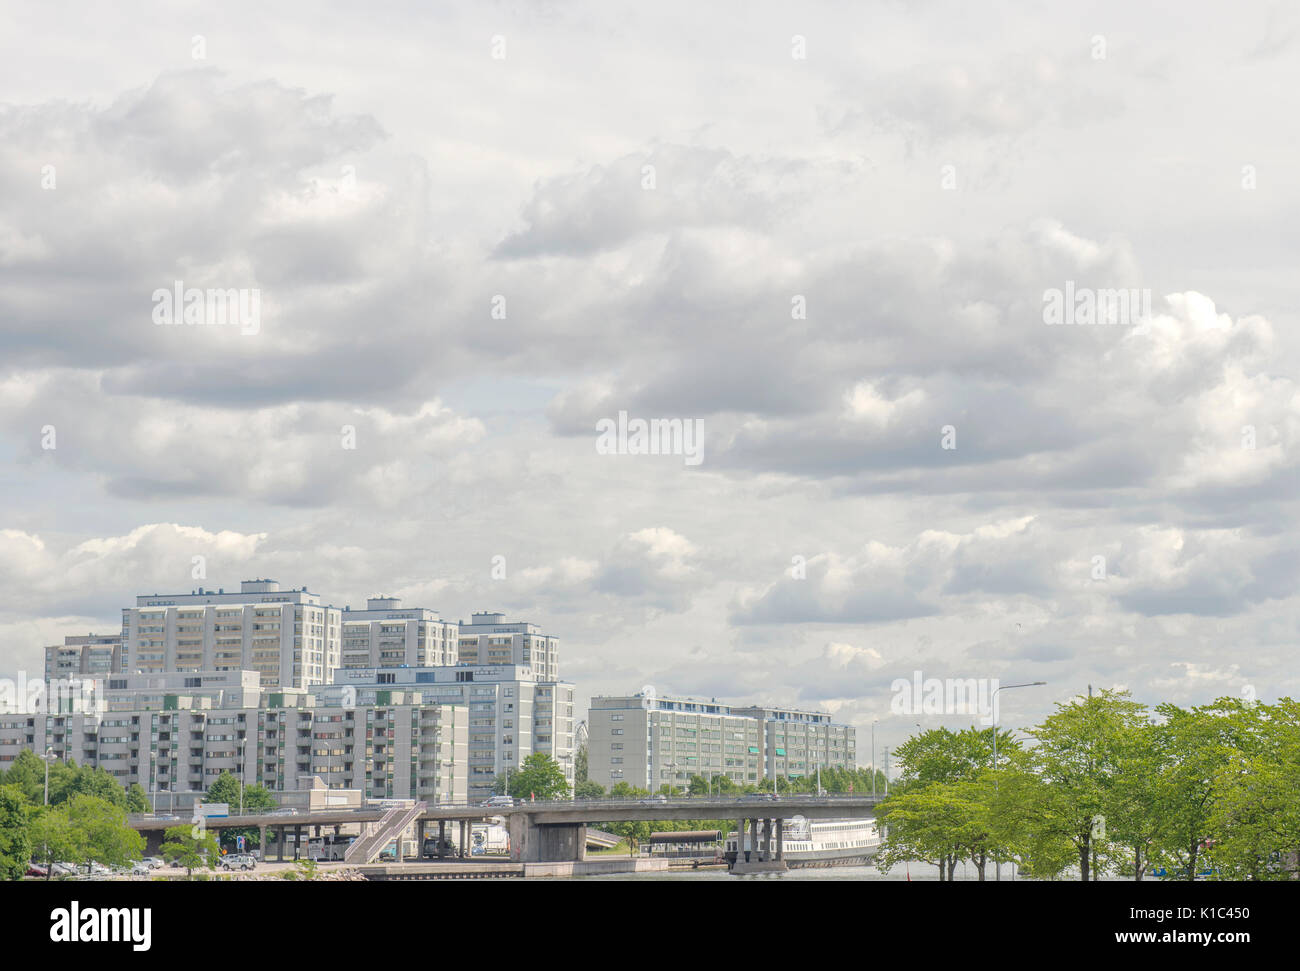 Modern residential buildings in Helsinki, Finland Stock Photo